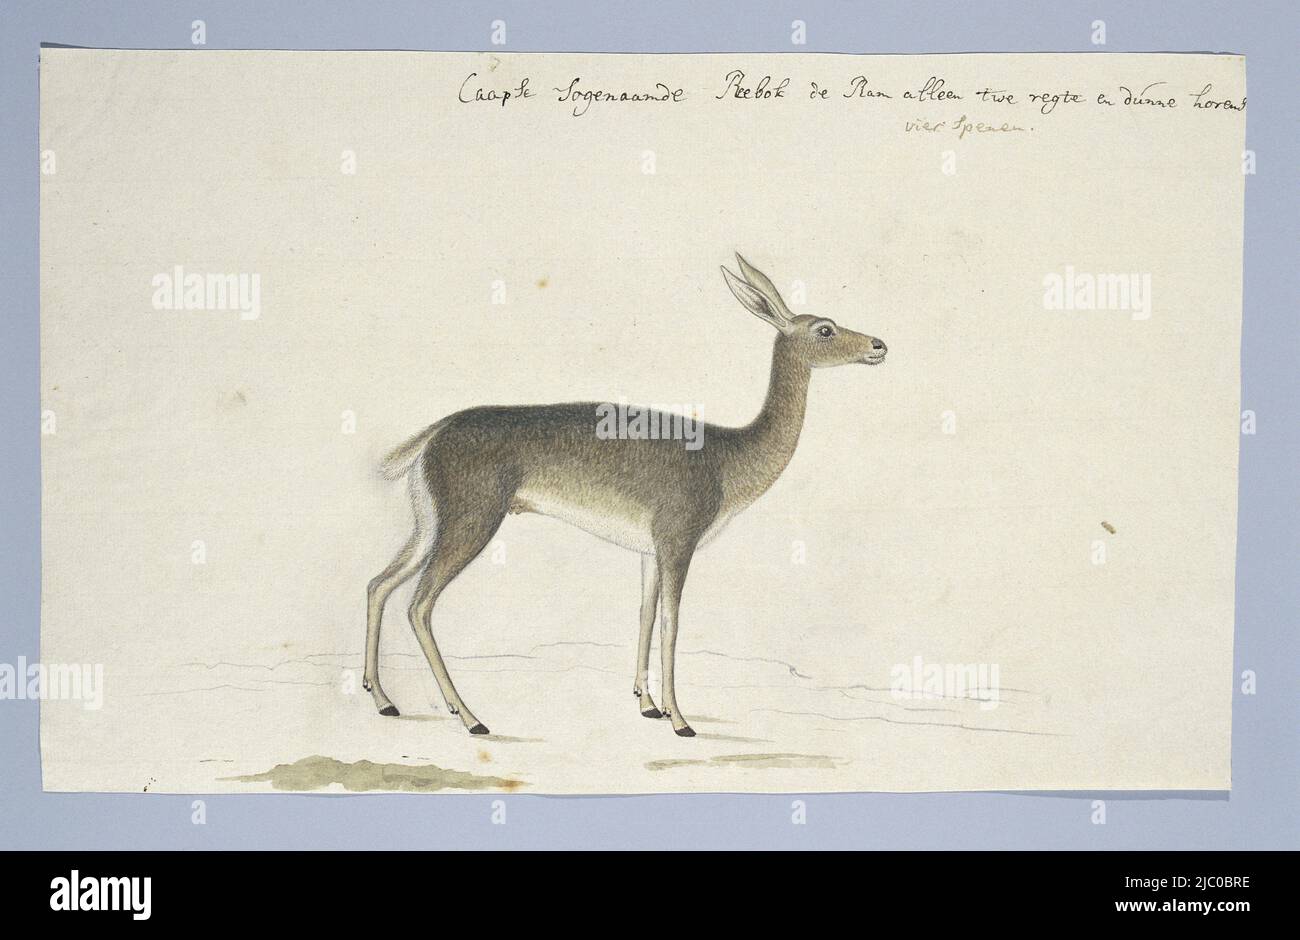 Pelea capreolus (Grey rhebok), draughtsman: Robert Jacob Gordon, Oct-1777 - Mar-1786, paper, brush, pen, h 660 mm × w 480 mm, h 231 mm × w 378 mm Stock Photo